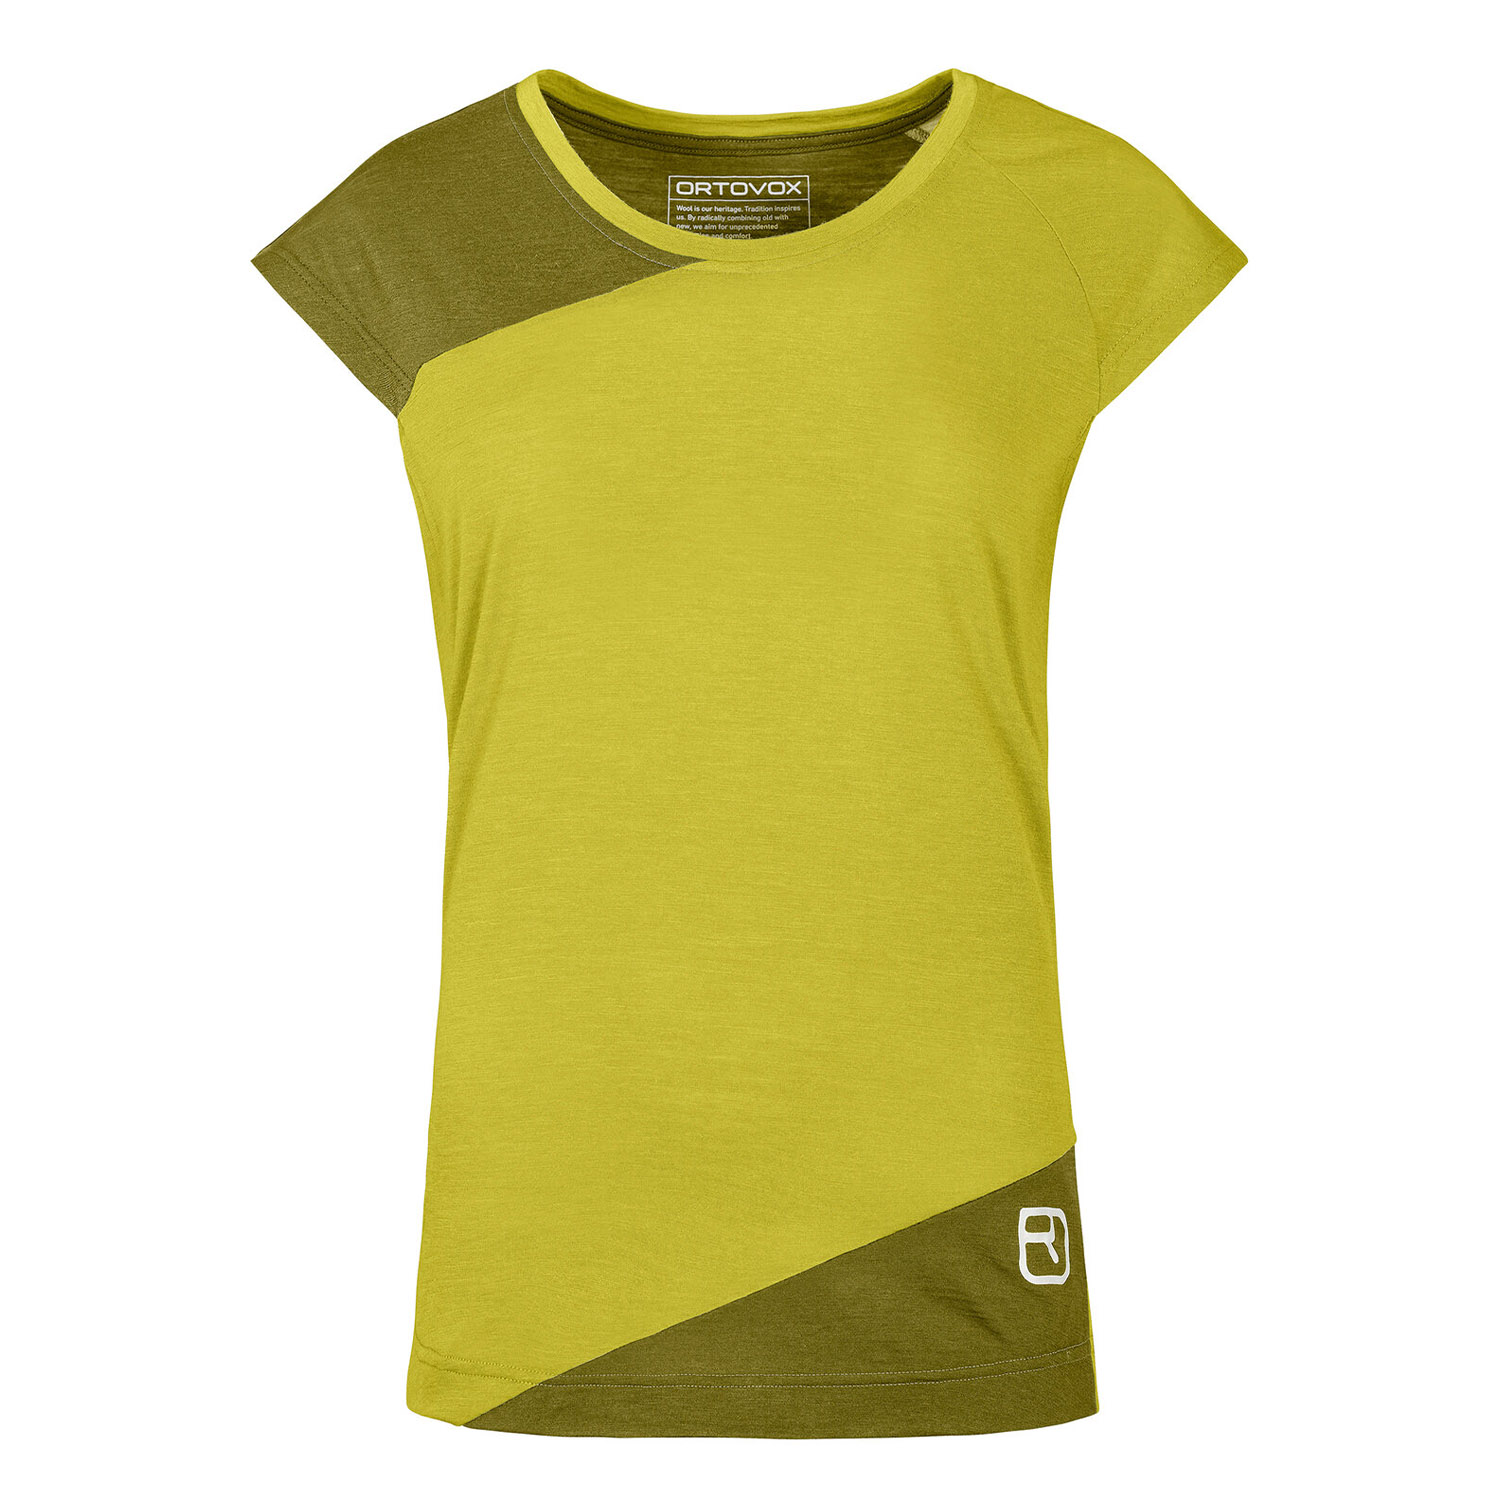 Ortovox 120 Tec T-Shirt W T-Shirt gelb